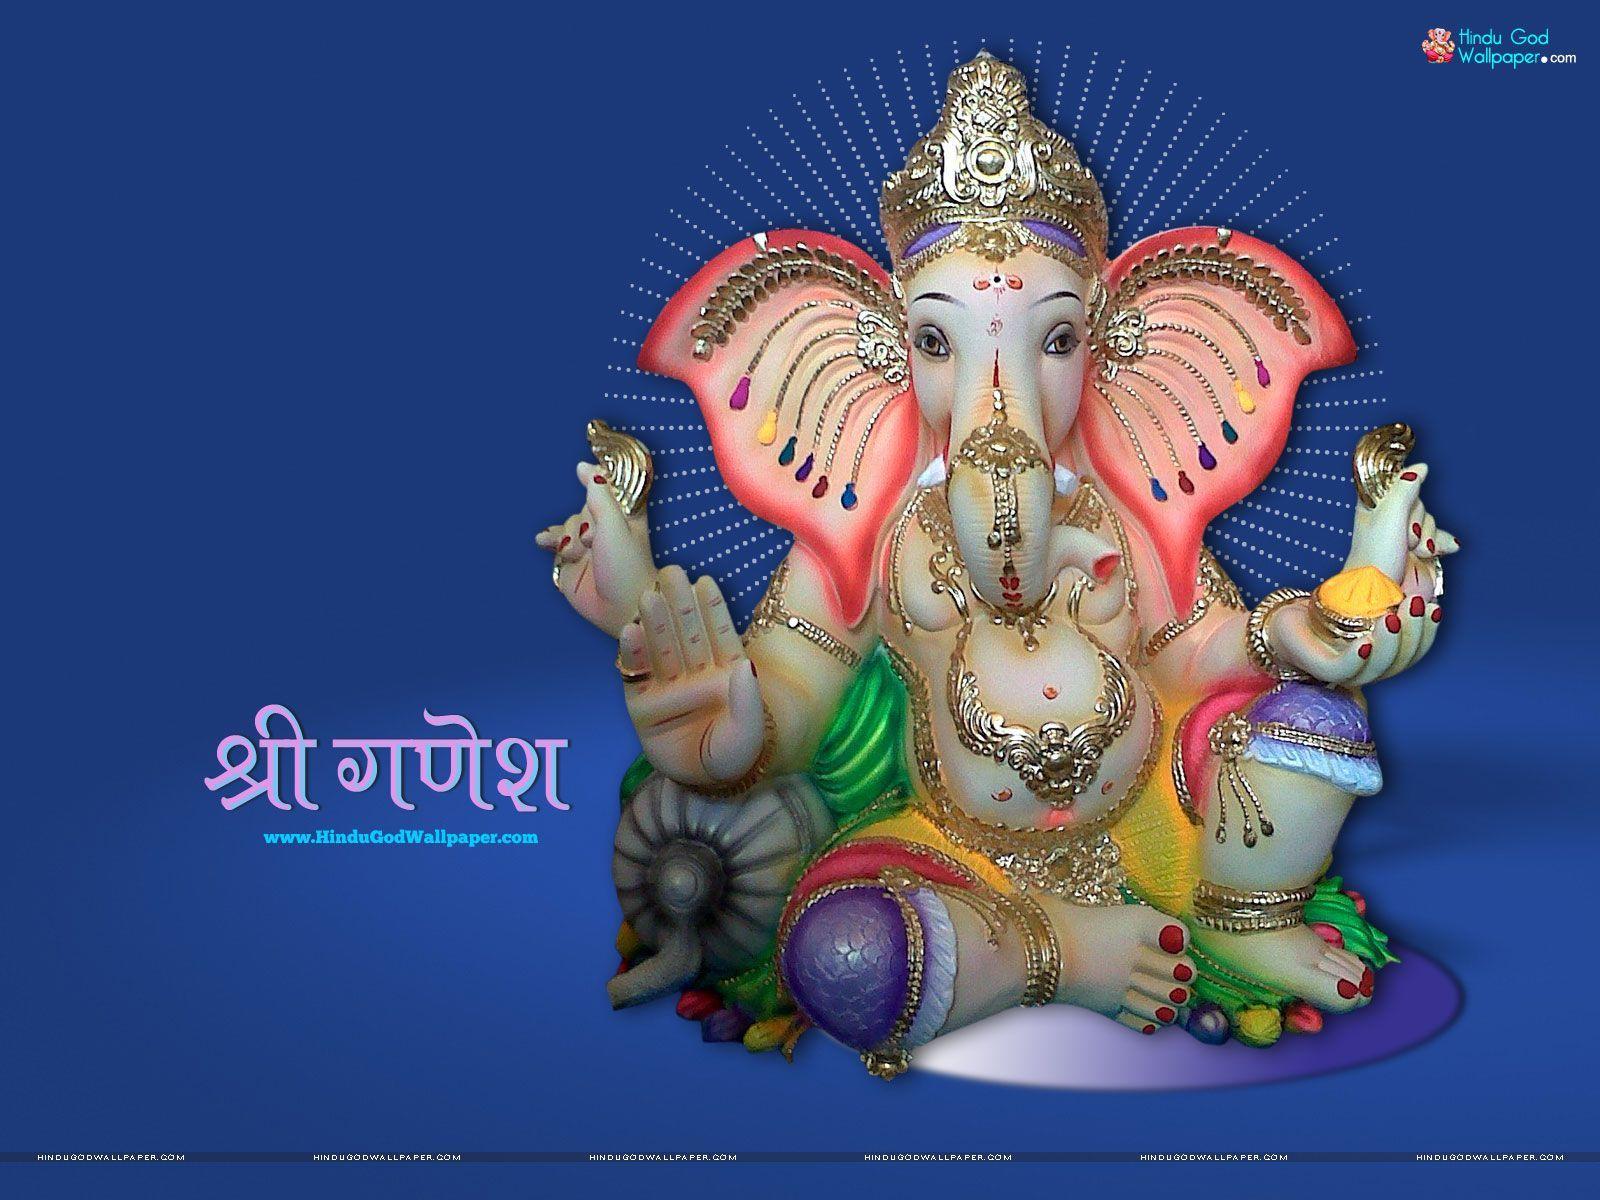 3D Ganesh Wallpaper Free Download. Lord Ganesha Wallpaper in 2019